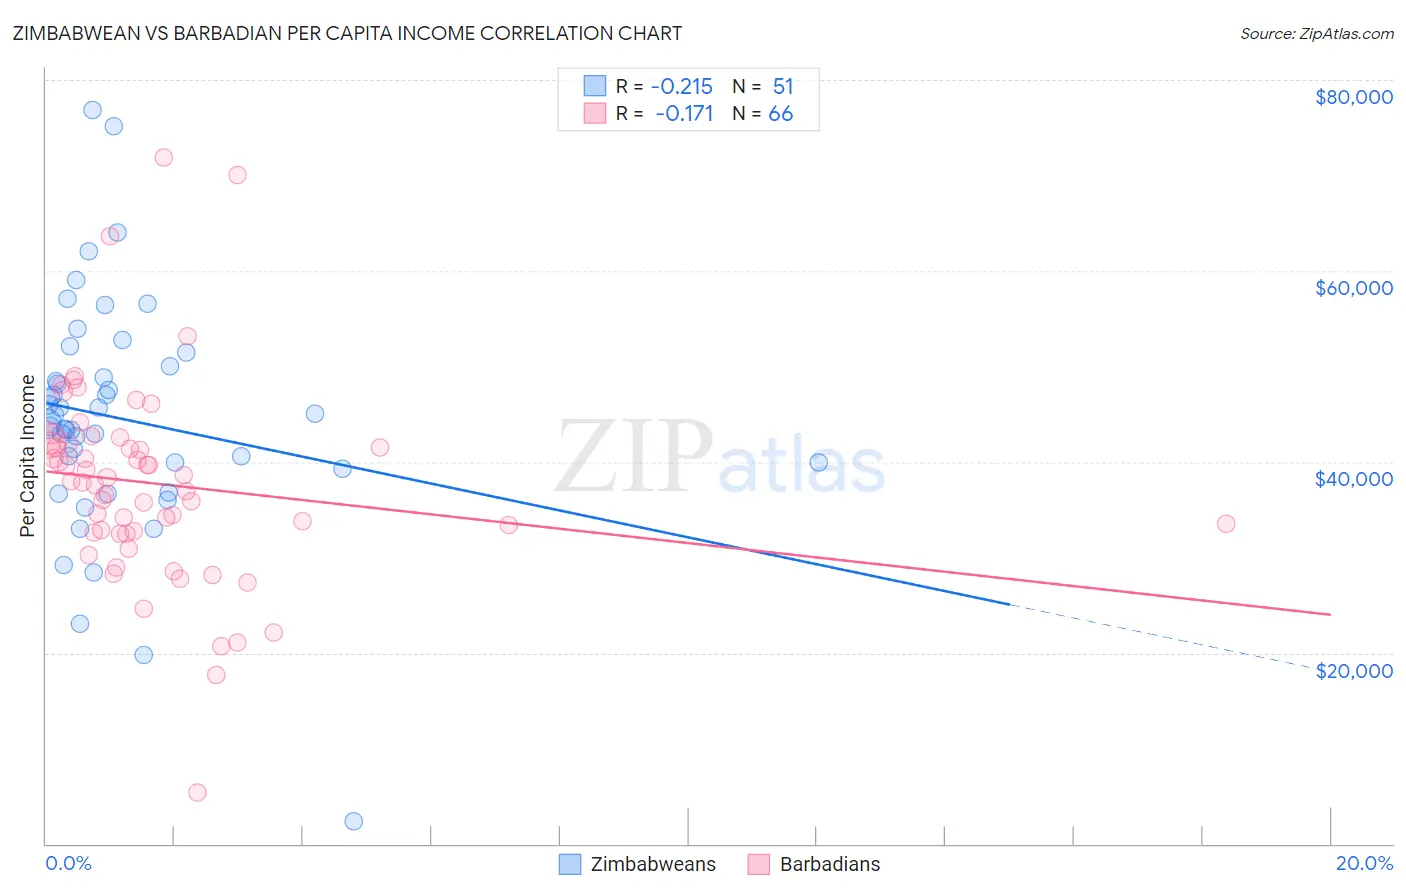 Zimbabwean vs Barbadian Per Capita Income